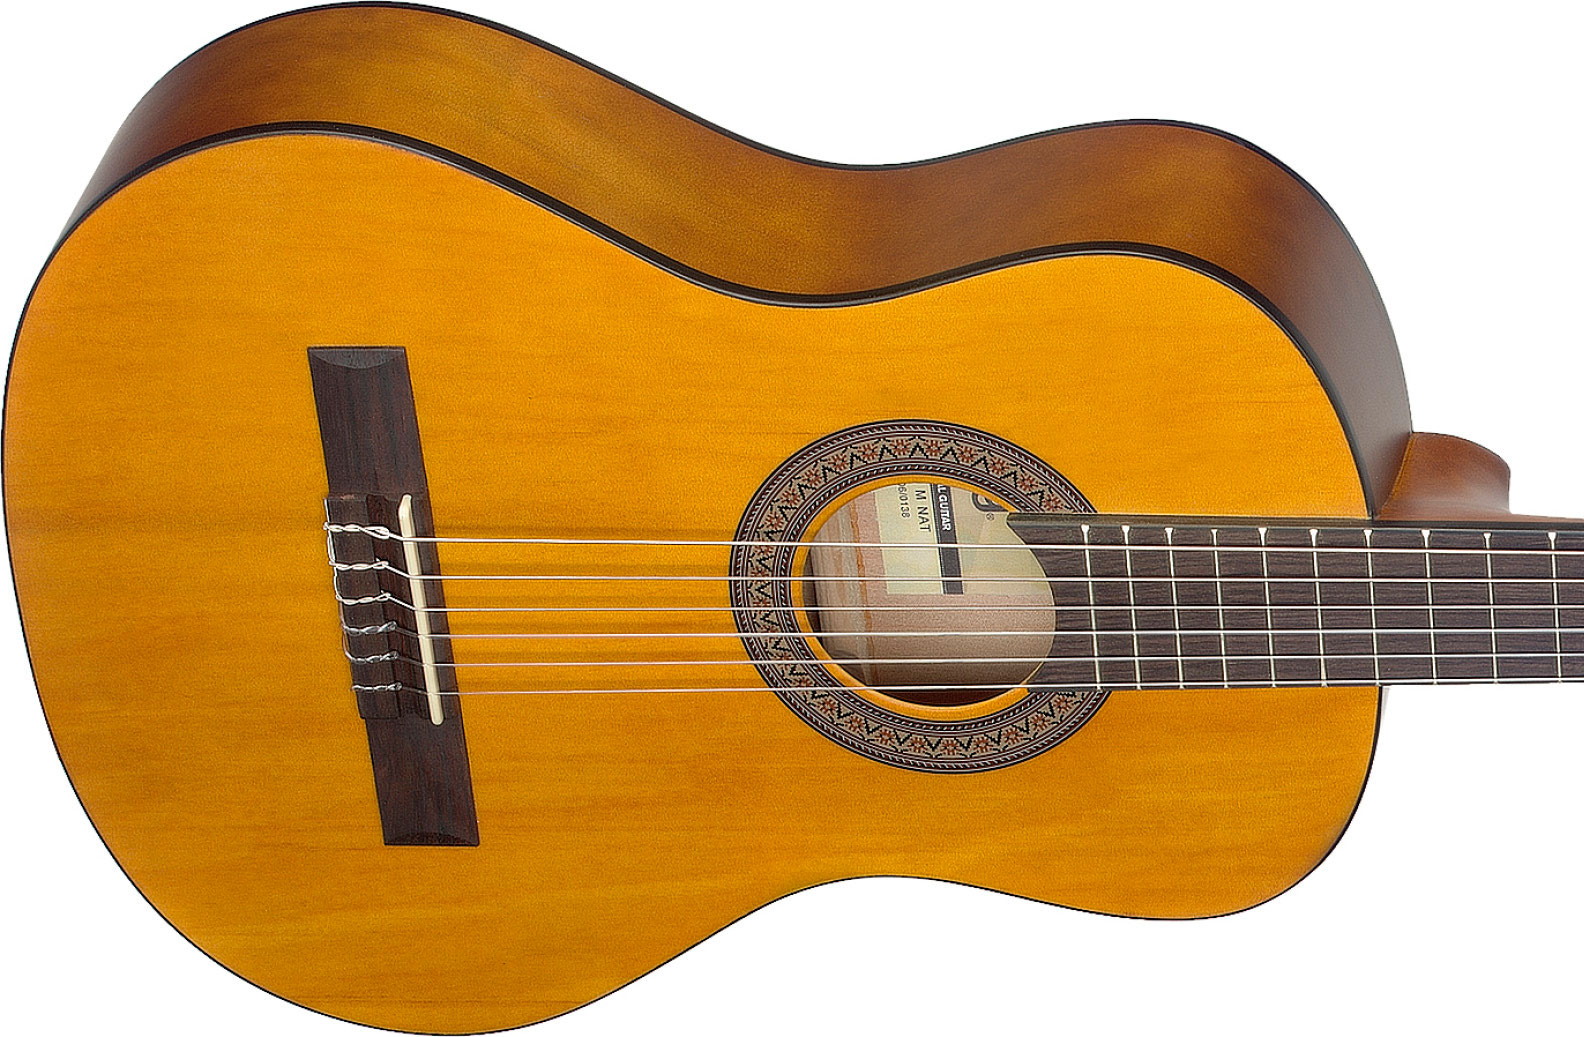 Stagg C410 1/2 Tilleul - Natural - Classical guitar 1/2 size - Variation 1